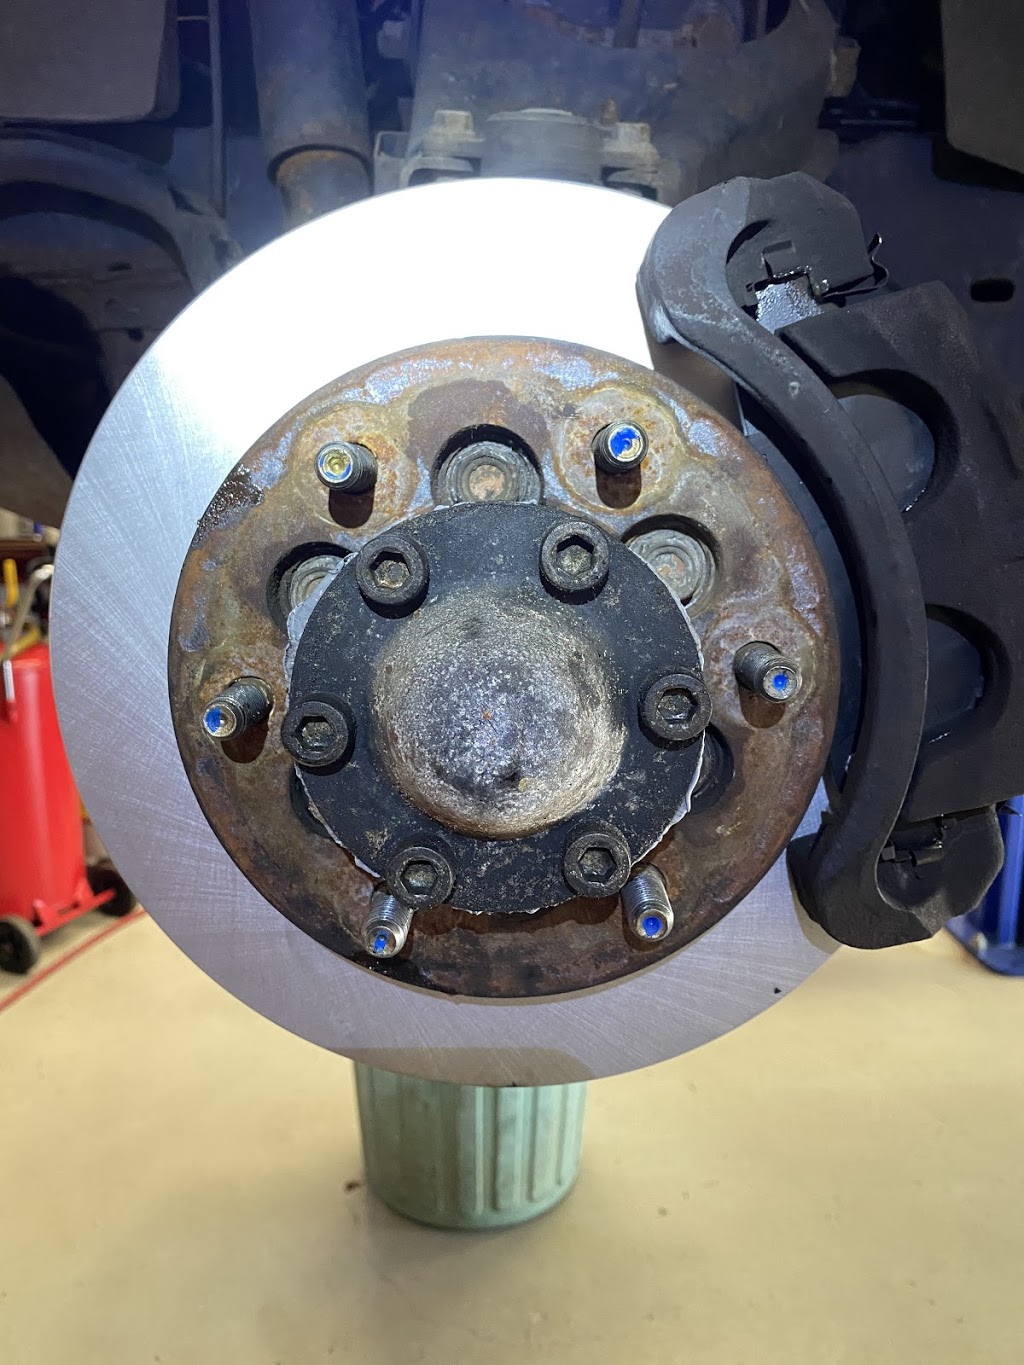 Savage Brakes and Mechanical | car repair | 7/25 Fishermans Rd, Kuluin QLD 4558, Australia | 0409058636 OR +61 409 058 636